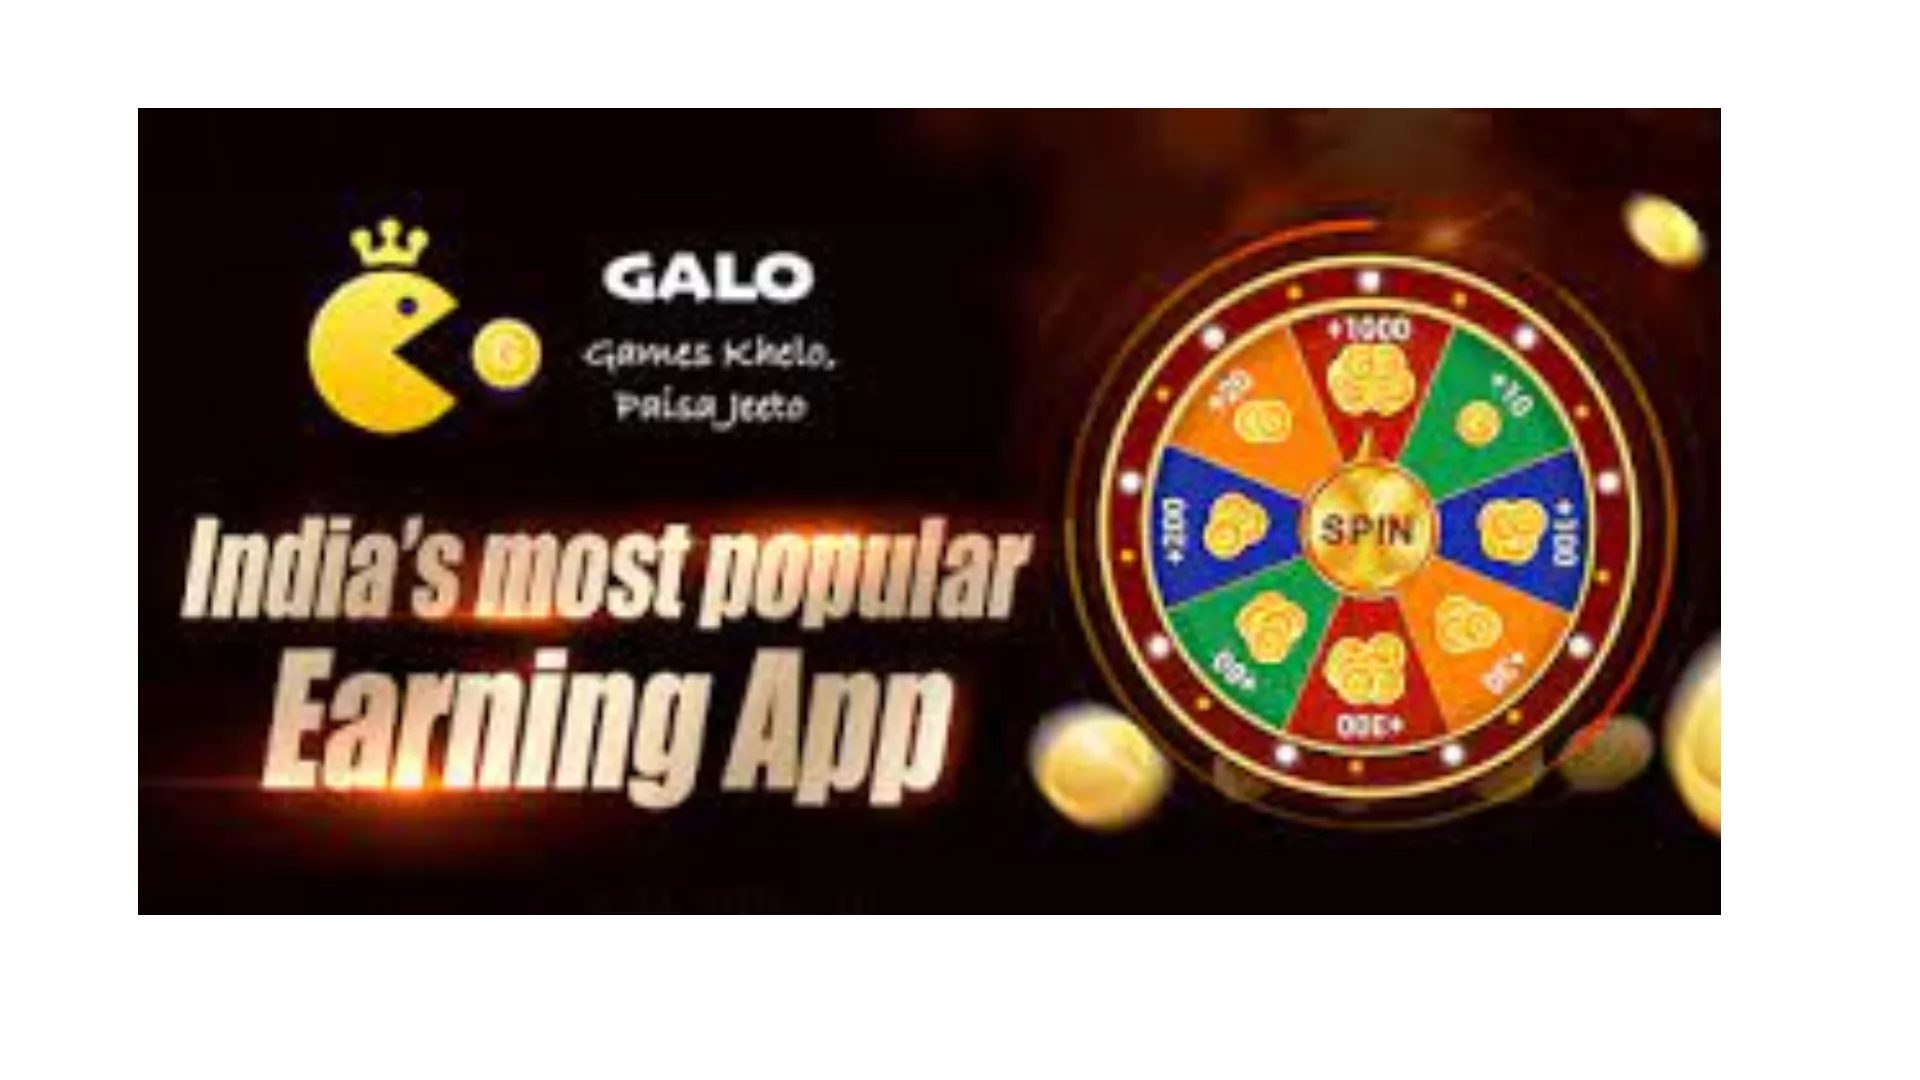 Galo App